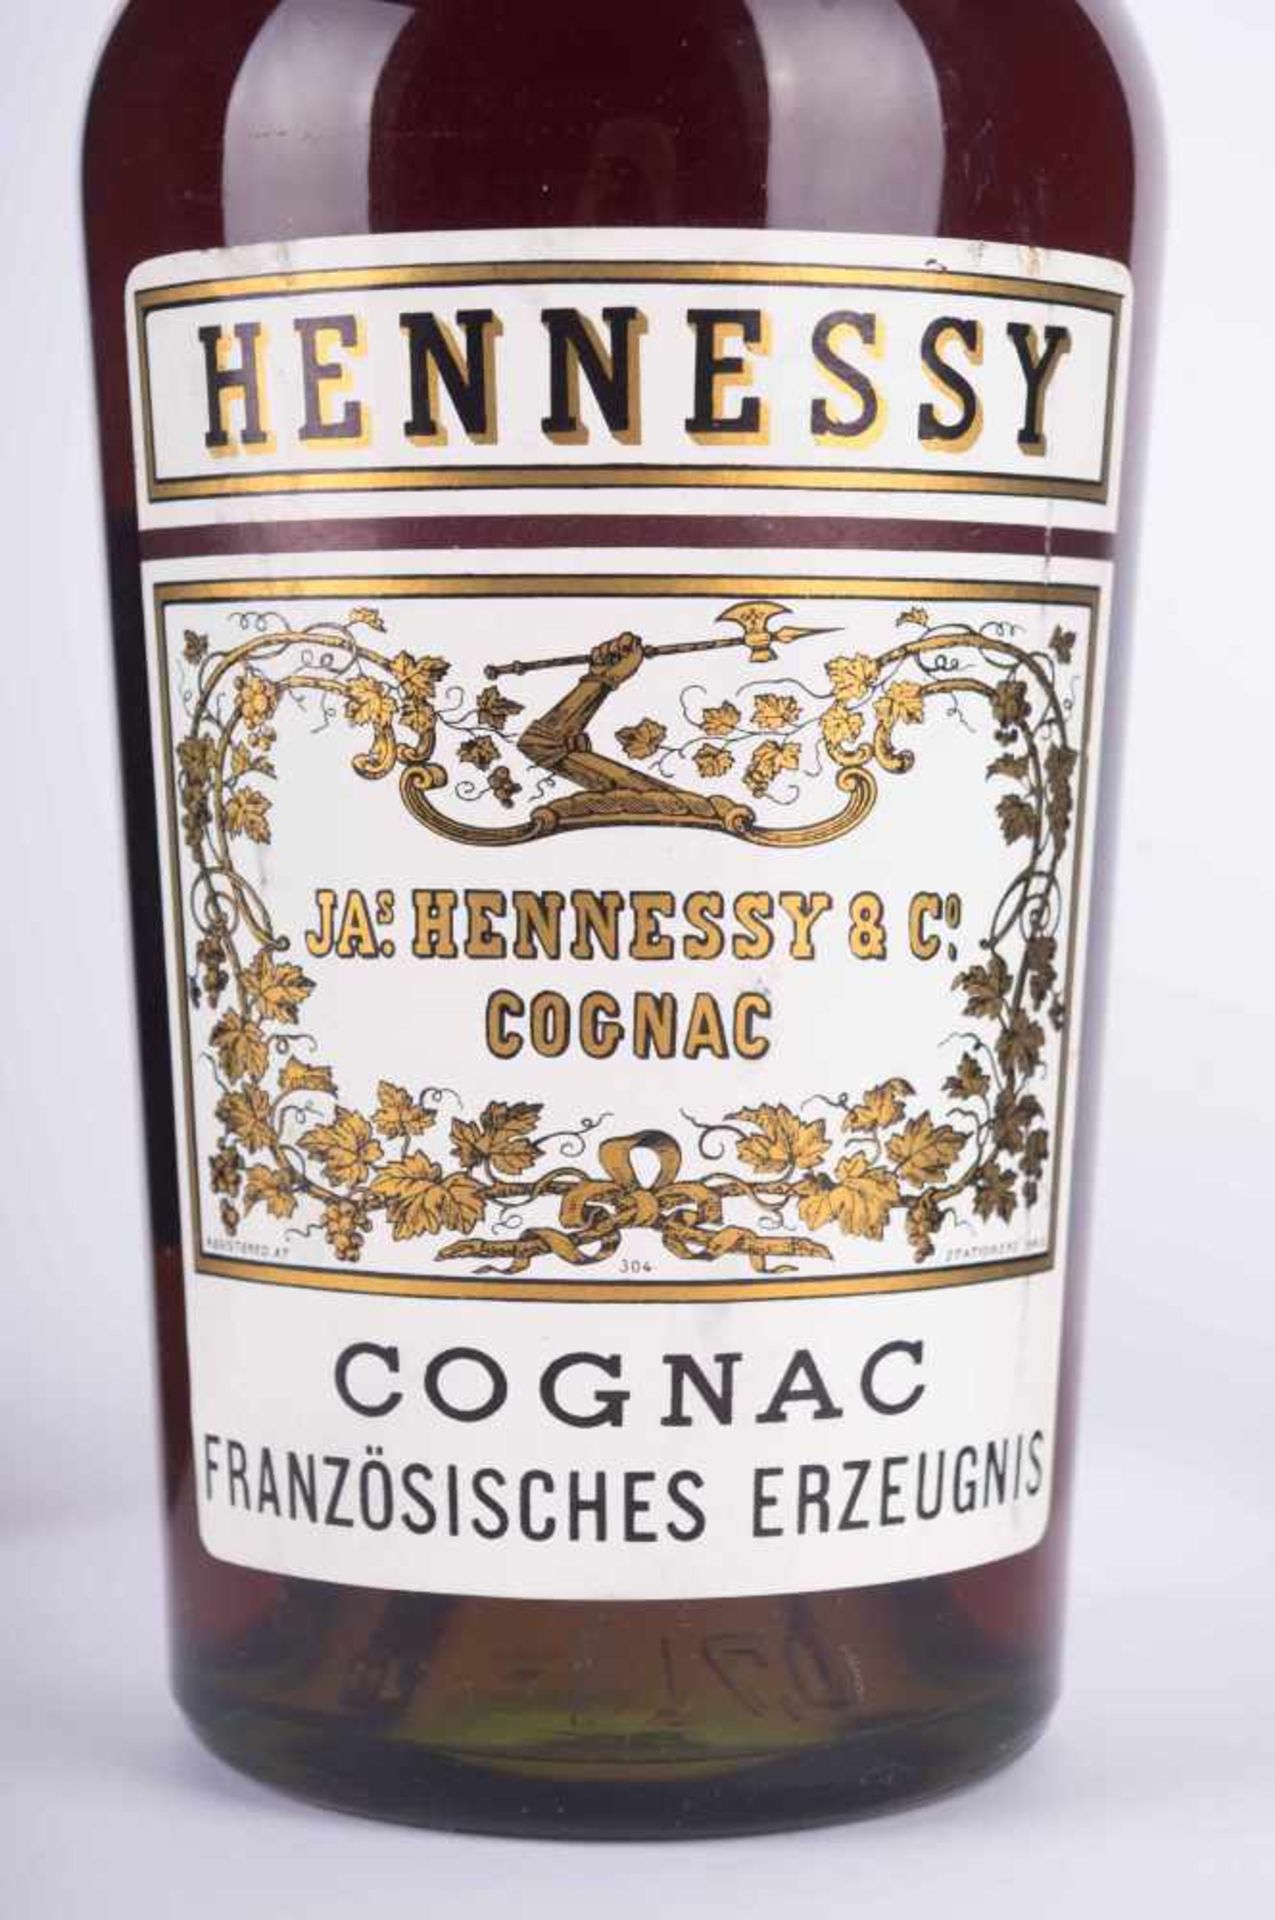 Hennessy Cognac Franreich 1960 Füllstand normal, Etikett guter Zustand, 0,7 l Hennessy Cognac France - Image 2 of 4